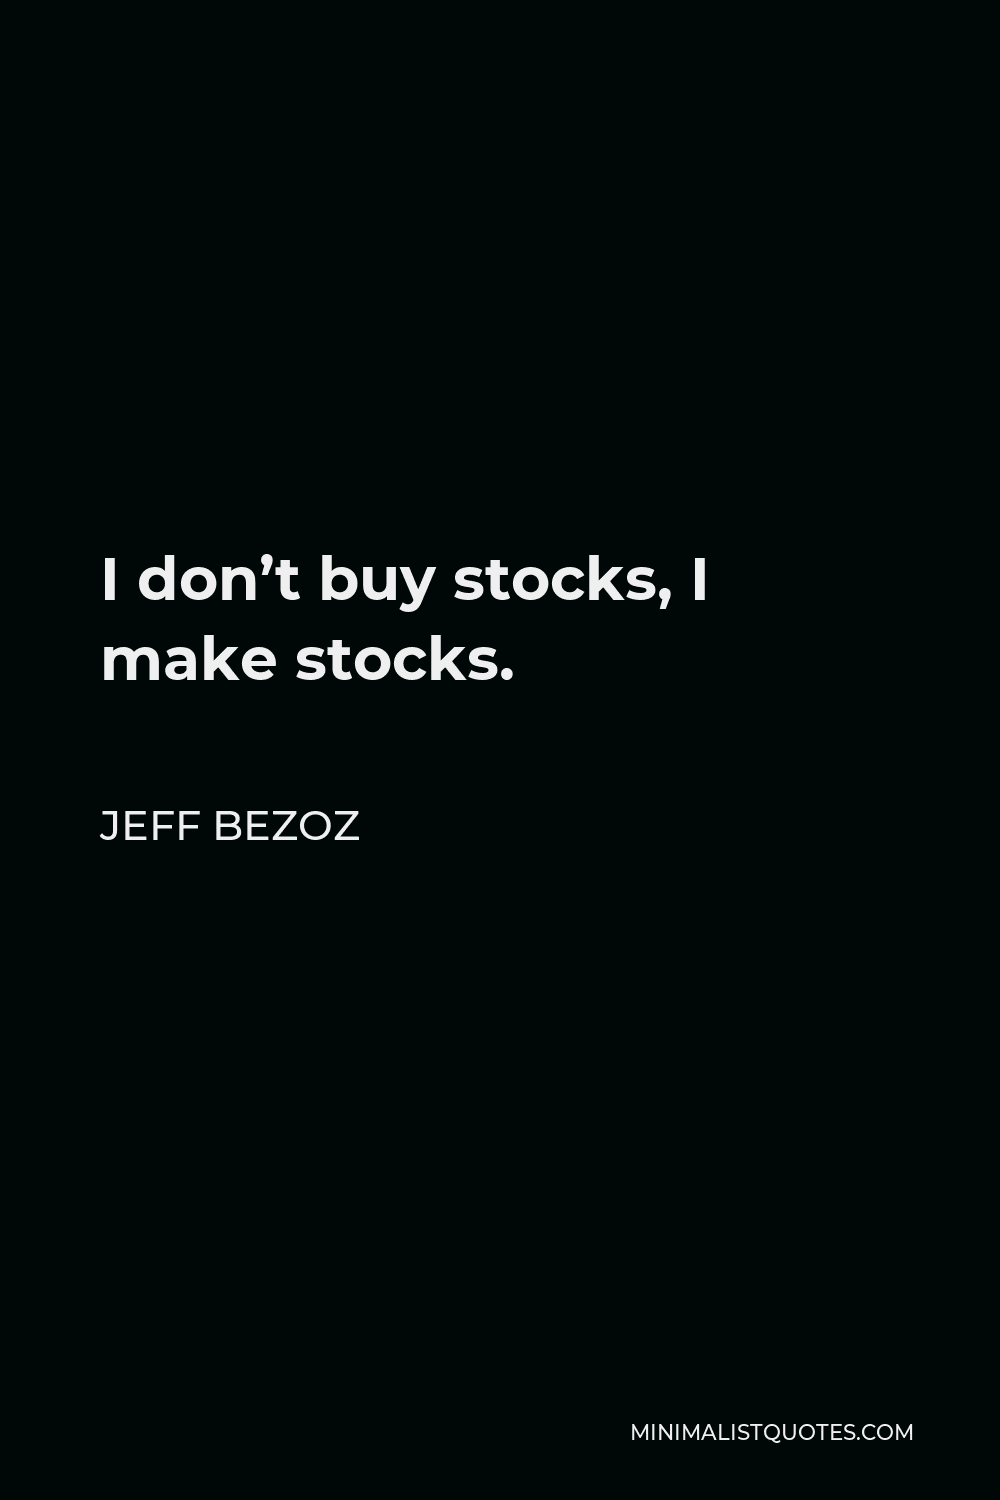 Jeff Bezoz Quote - I don’t buy stocks, I make stocks.